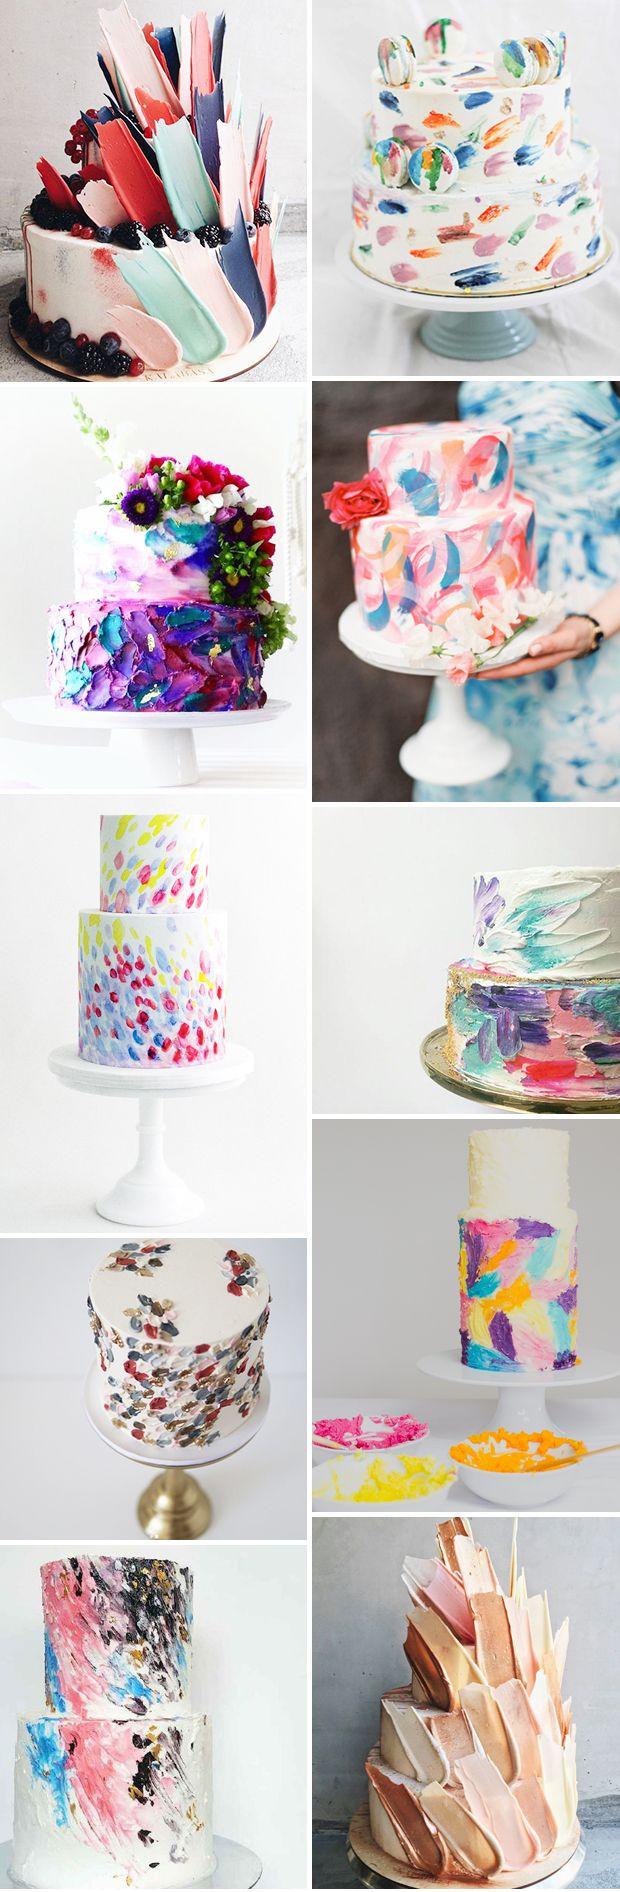 Wedding - Brushstroke Cakes - 12 Phenomenal Wedding Cake Works Of Art